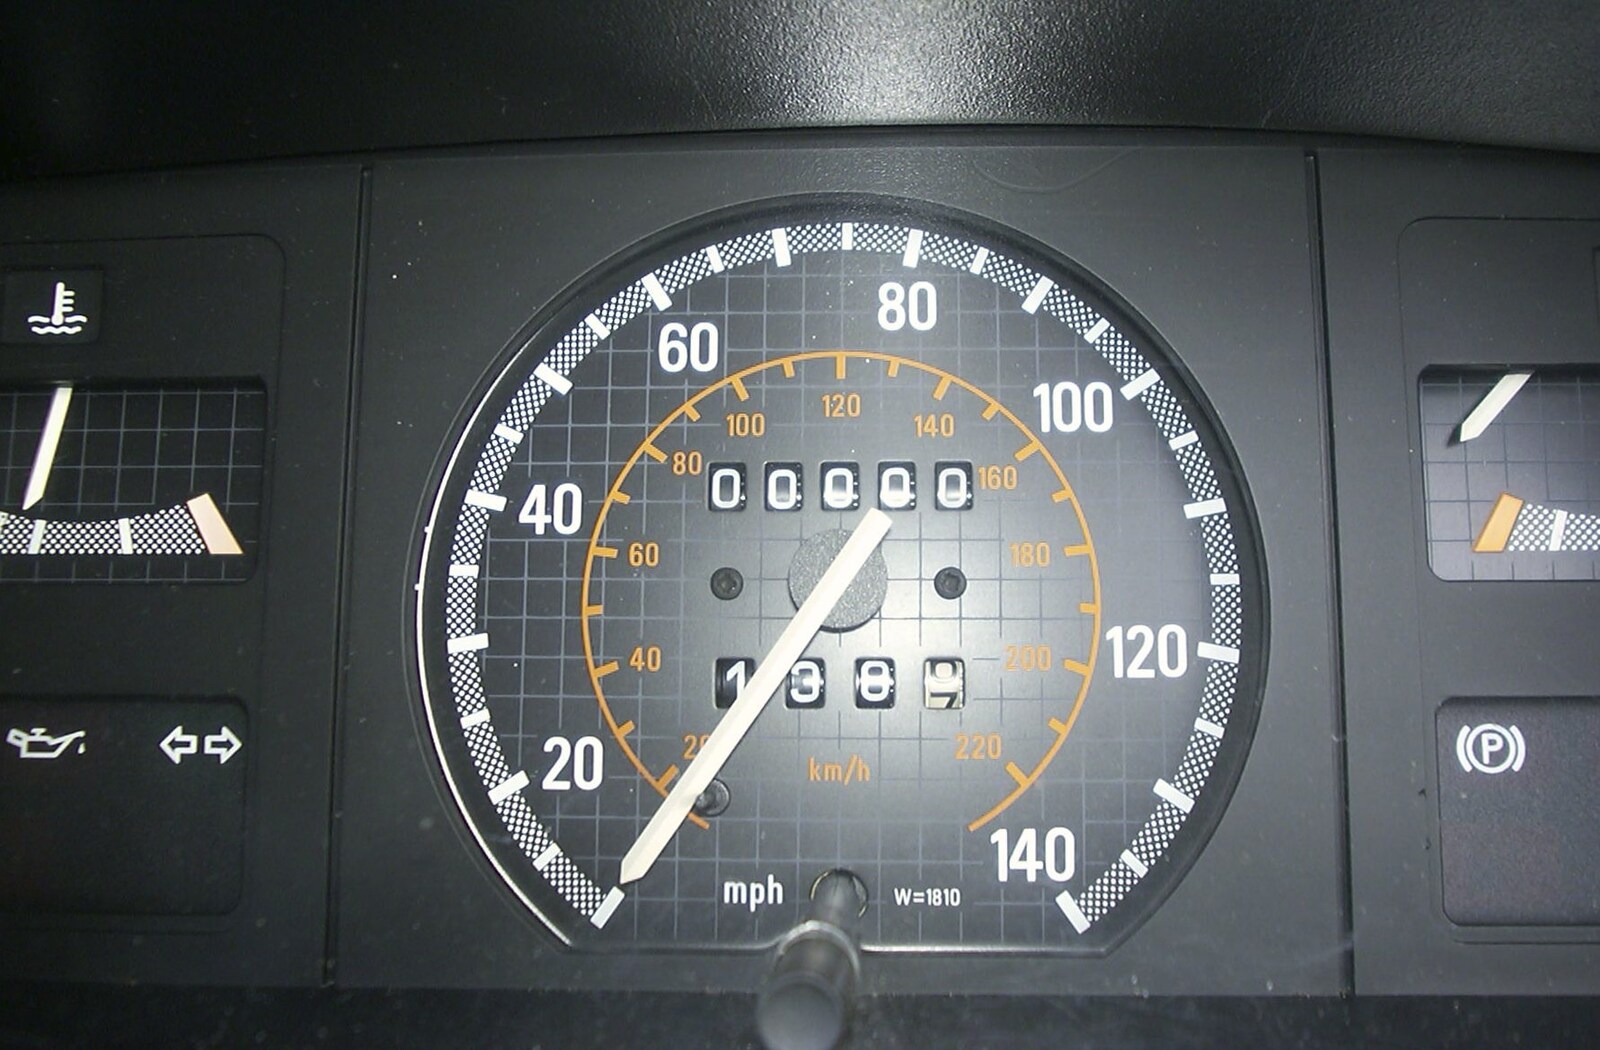 3G Lab at Jools Holland, Audley End, Saffron Walden, Essex - 25th July 2004: Vehicle A - a 1300cc Astra - clocks 200,000 miles